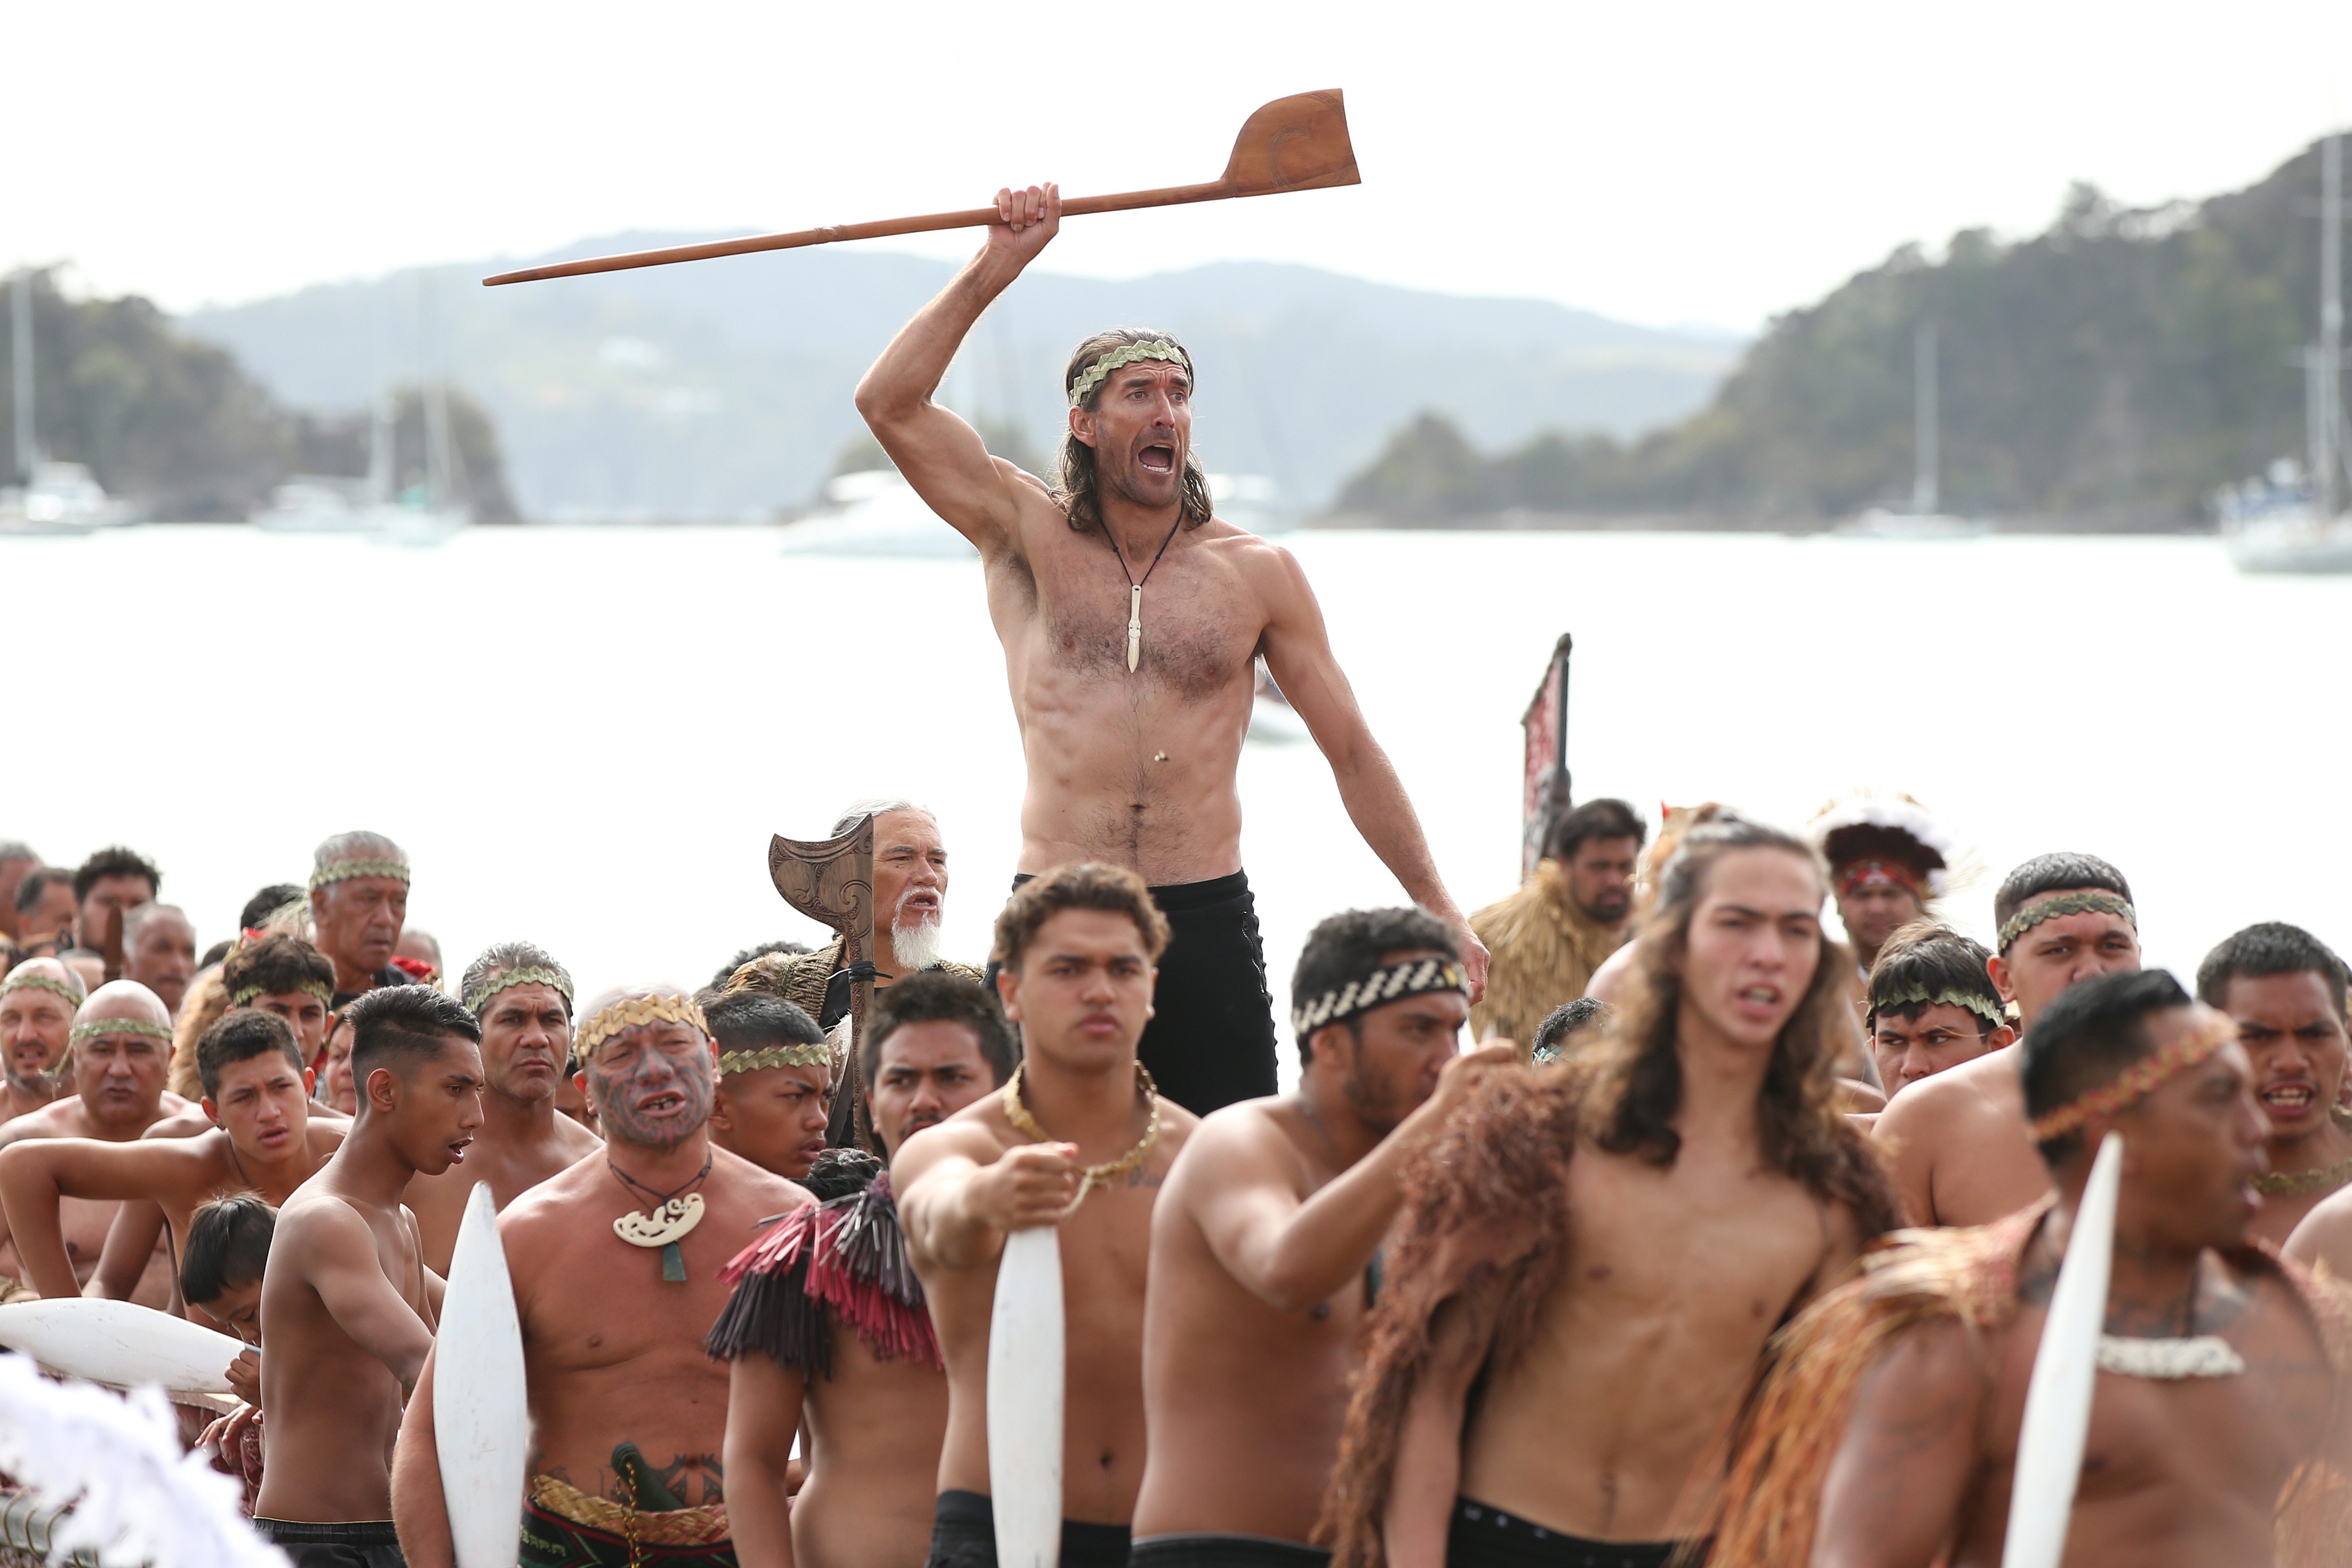 The waka arrive outside Te Tiriti o Waitangi marae on Waitangi Day - 6 February 2020 - in Waitangi, New Zealand. 